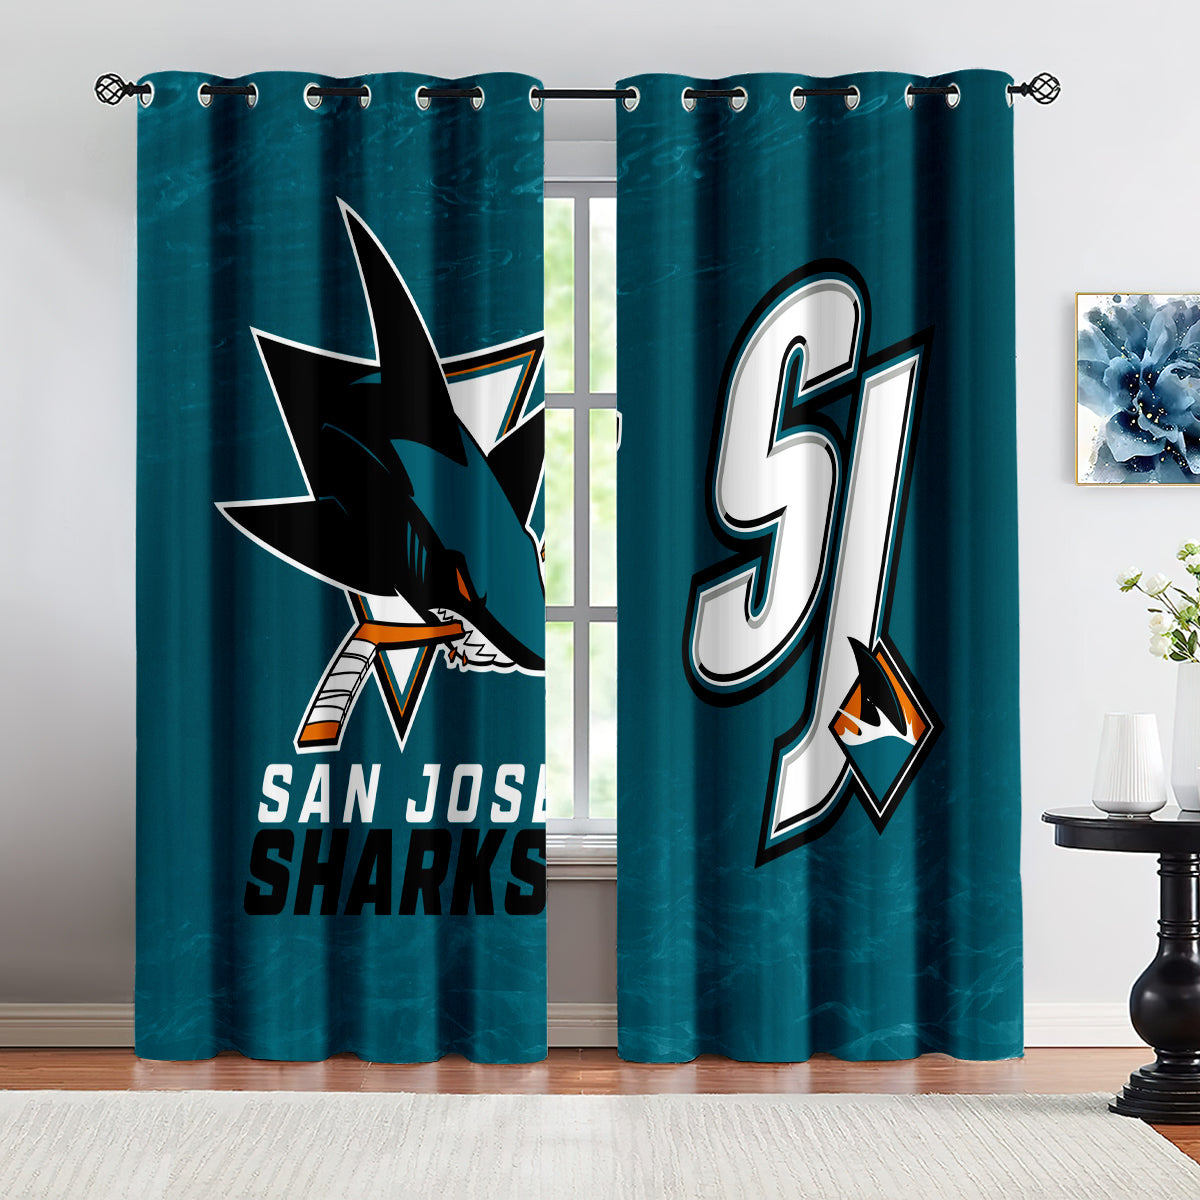 San Jose Sharks Hockey League Blackout Curtains Drapes For Window Treatment Set